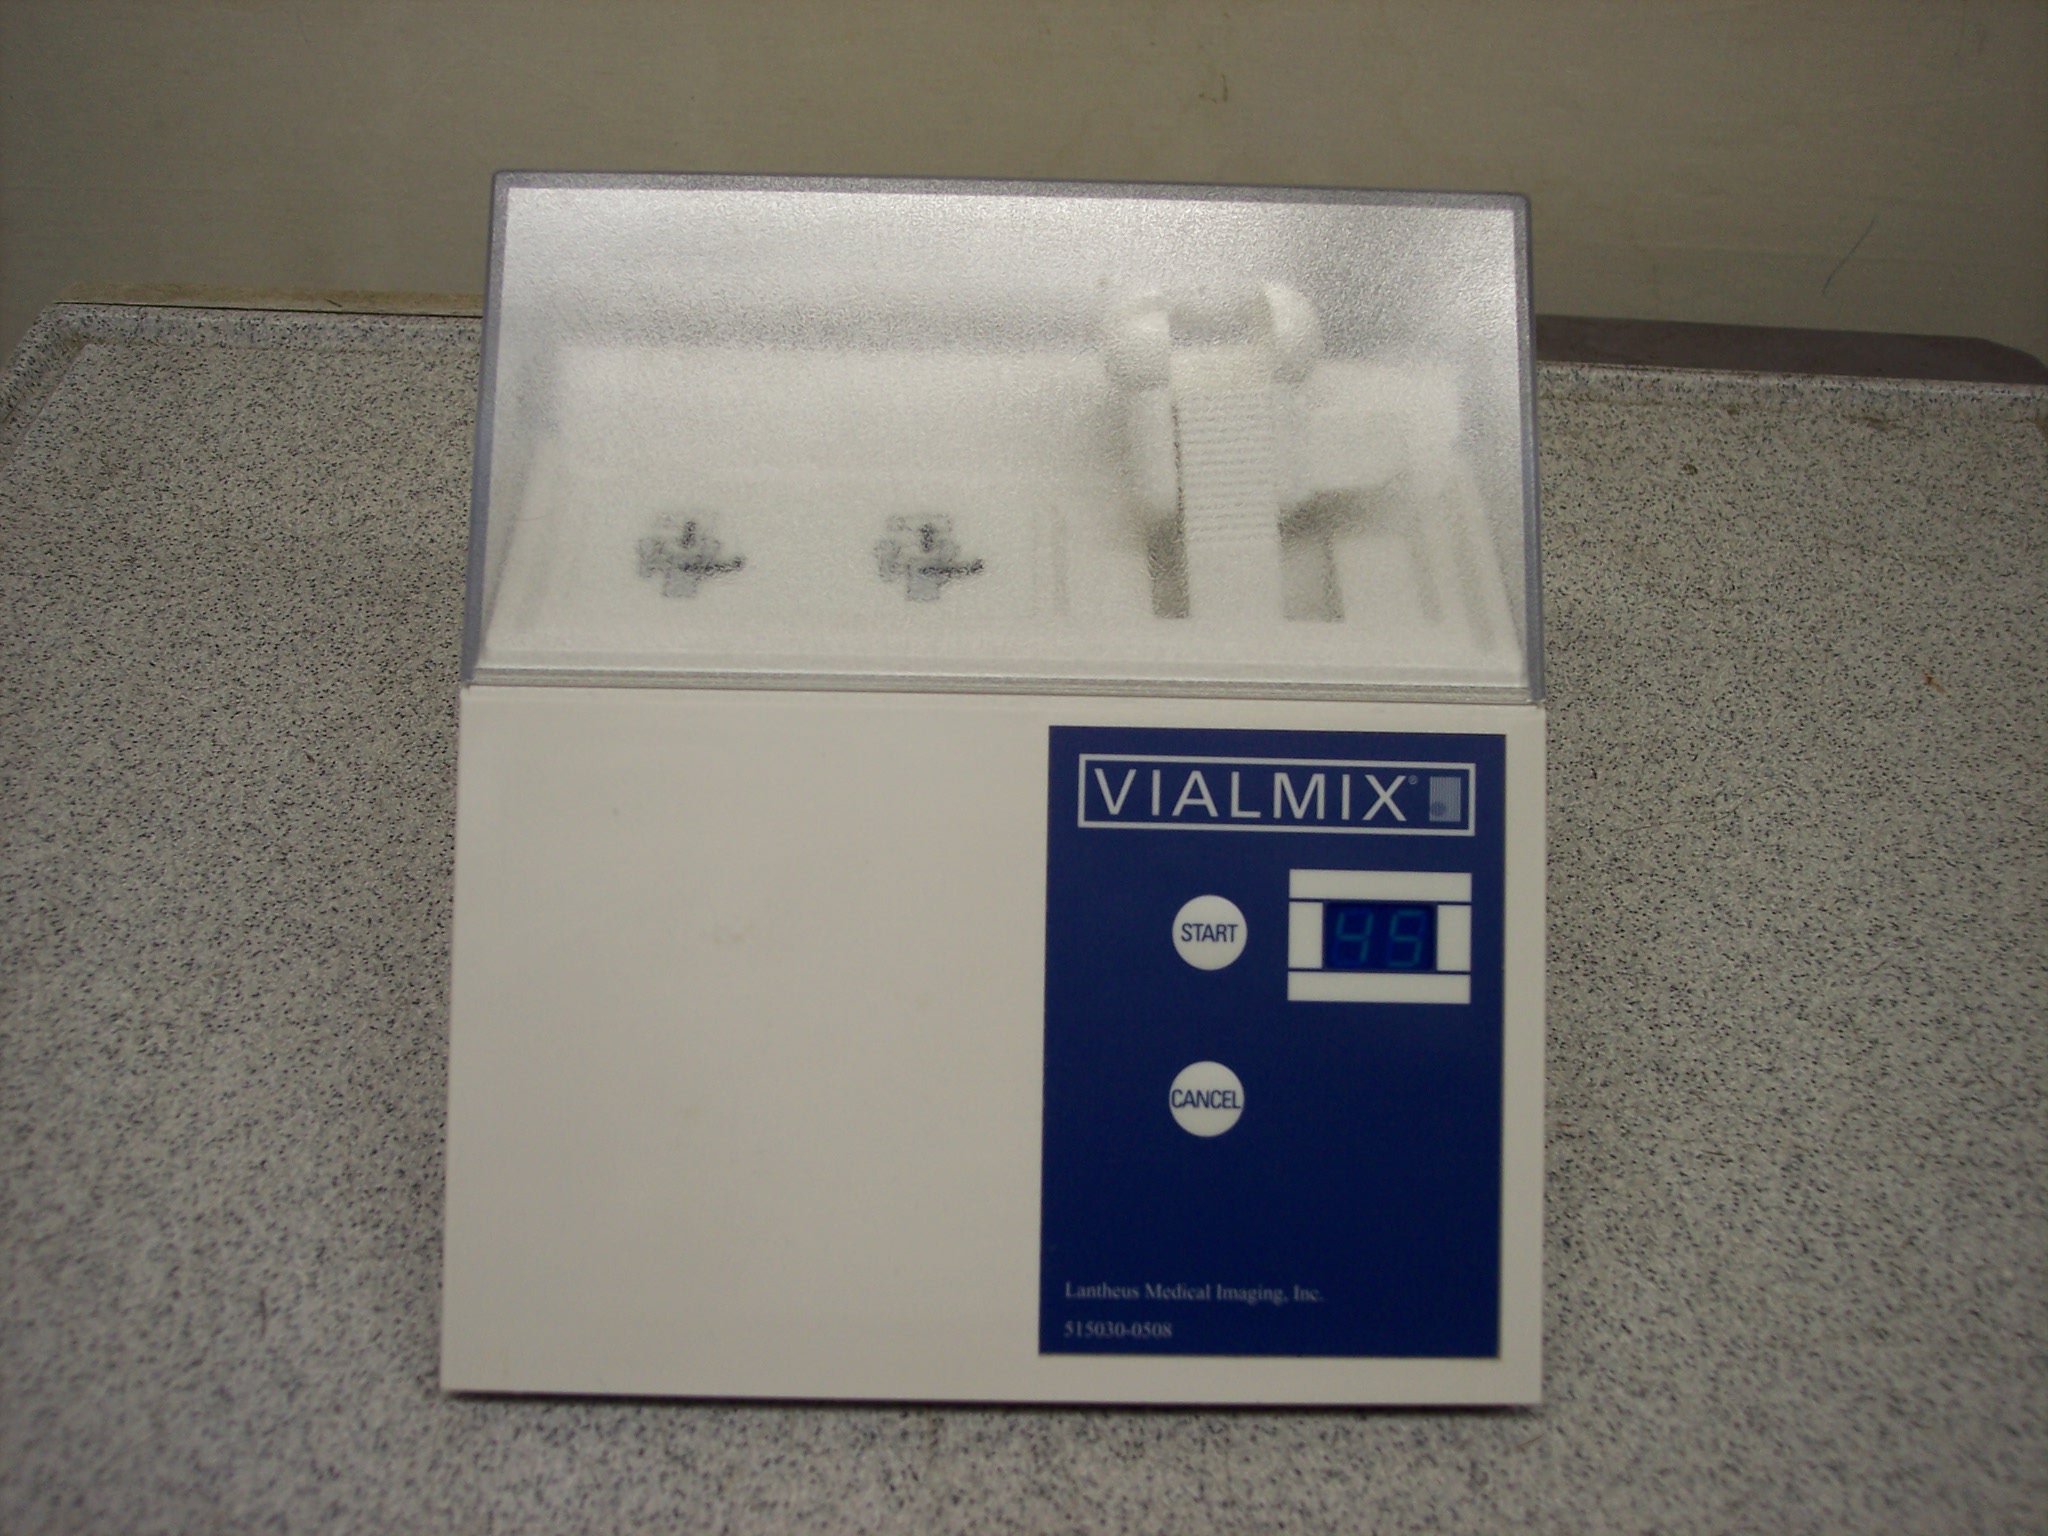 Lantheus Medical Imaging, Inc. Vialmix 515030-0508